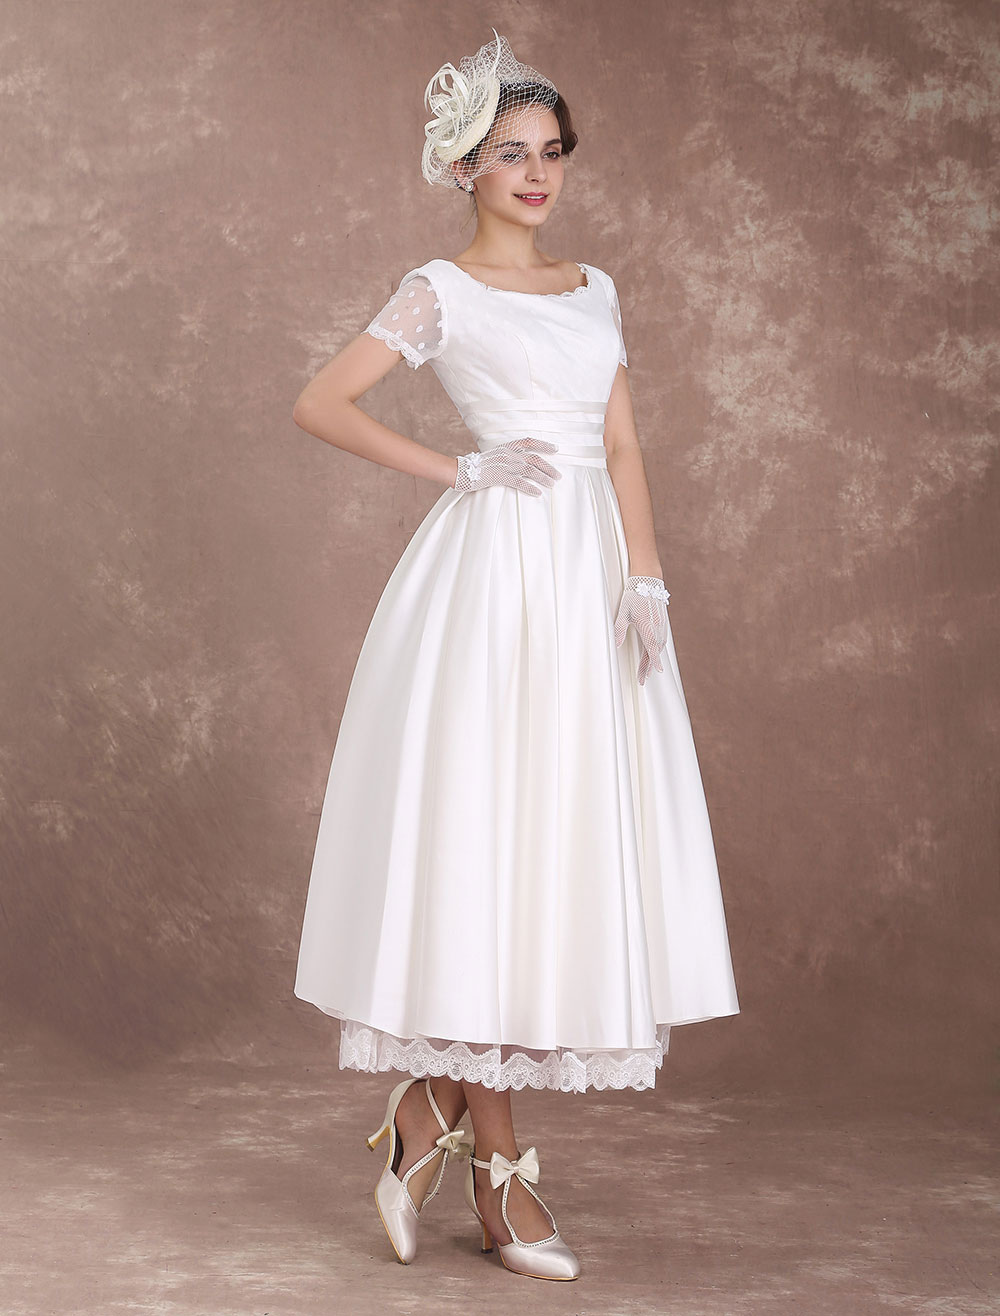 Vintage Wedding Dress Short Sleeve 1950's Bridal Dress Backless Polka ...